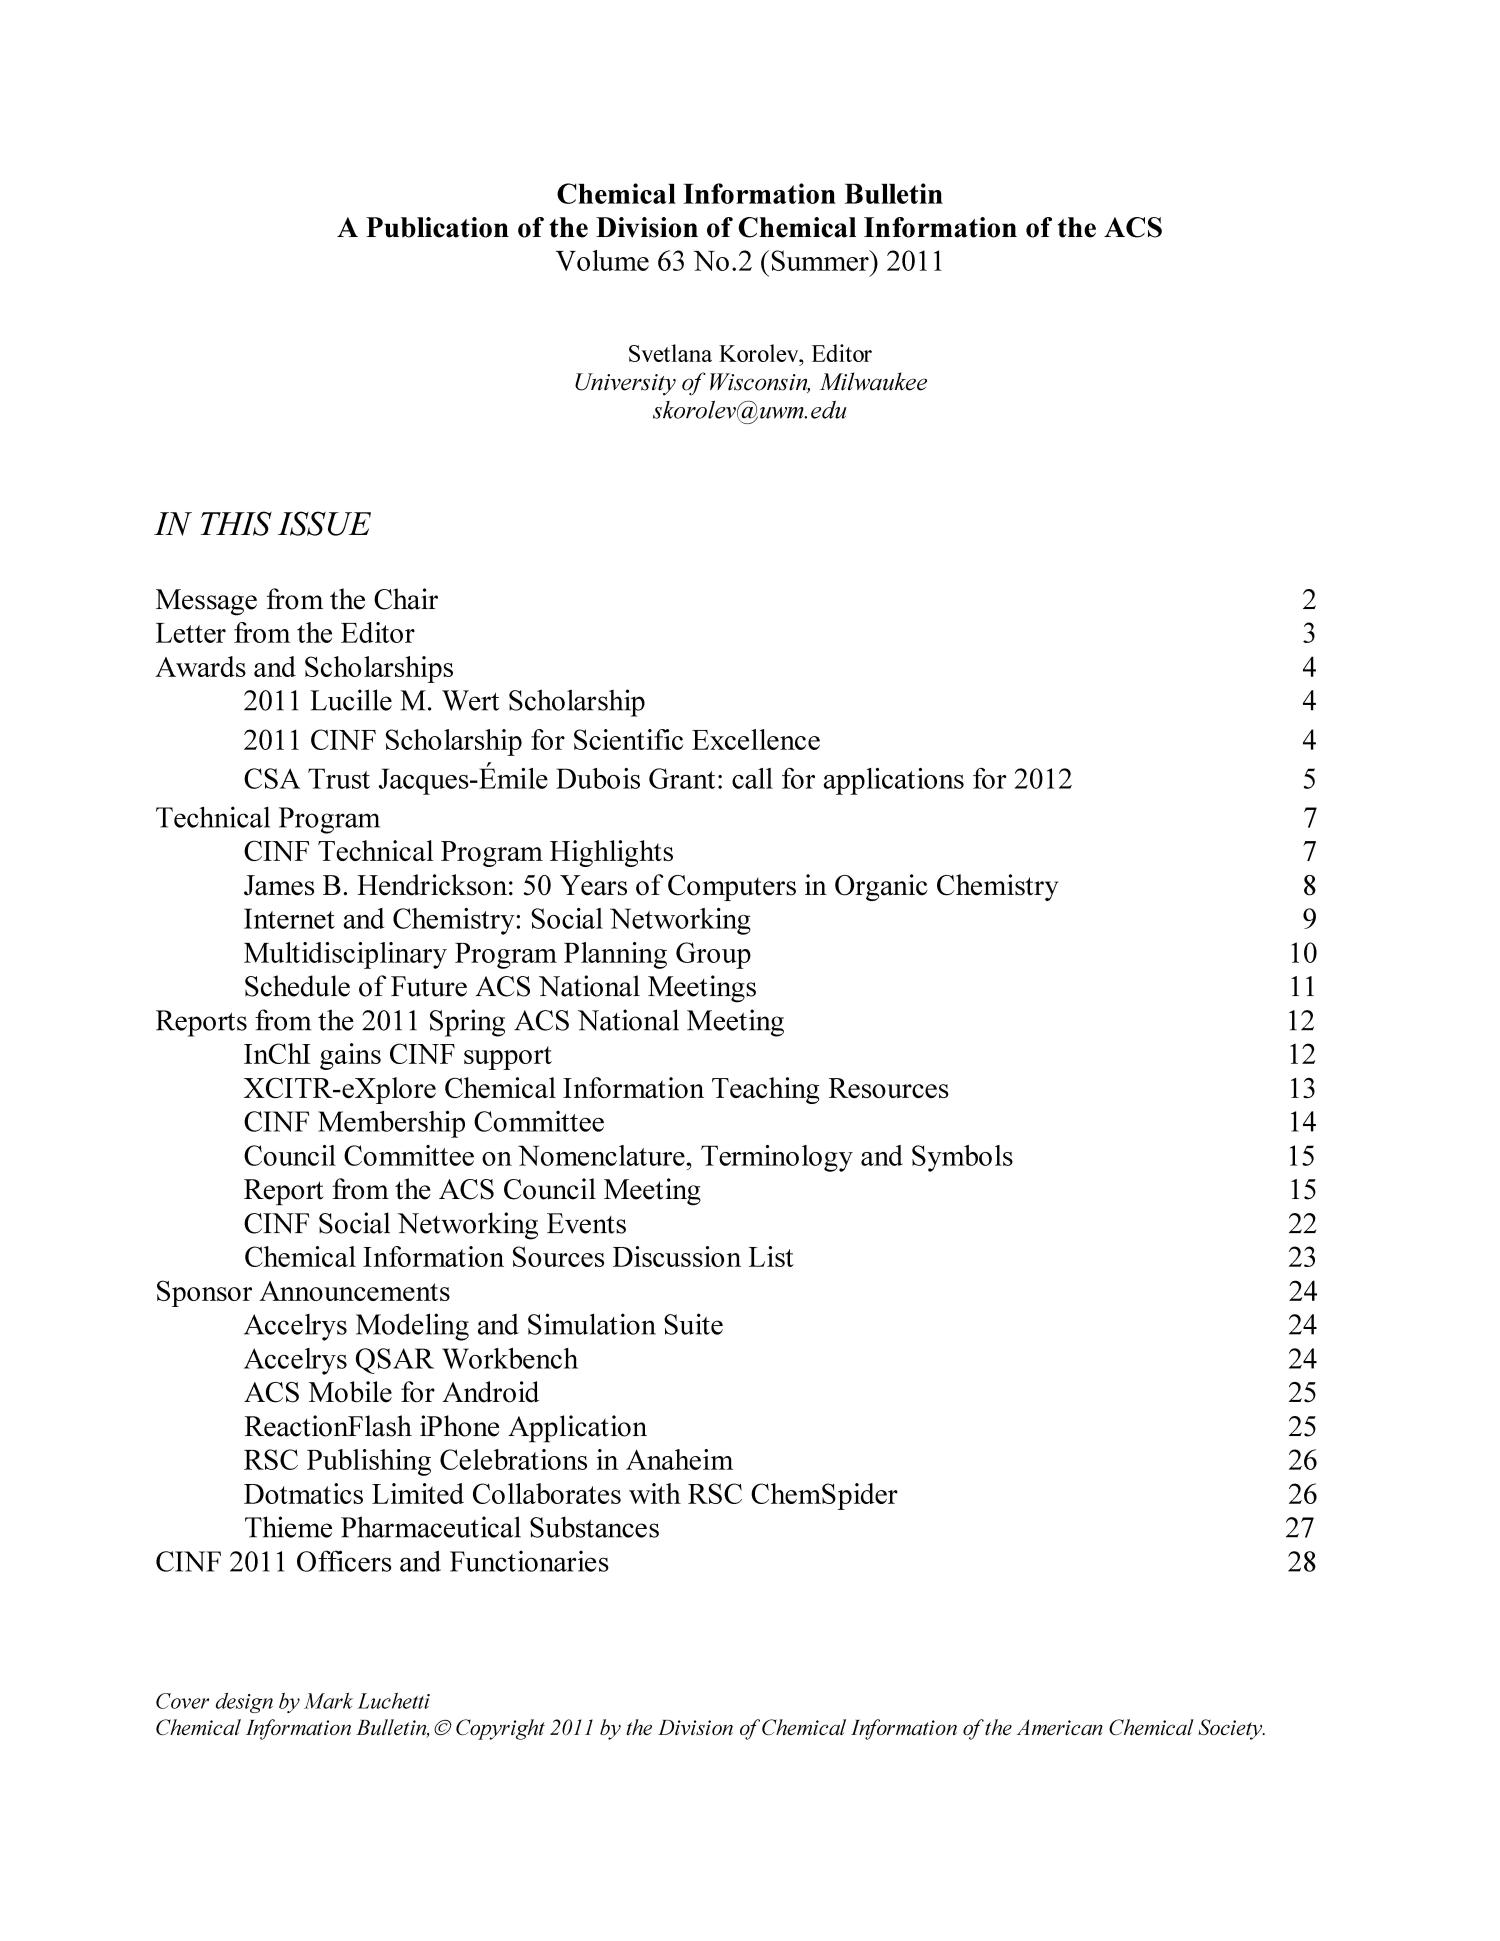 Chemical Information Bulletin, Volume 63, Number 2, Summer 2011
                                                
                                                    1
                                                